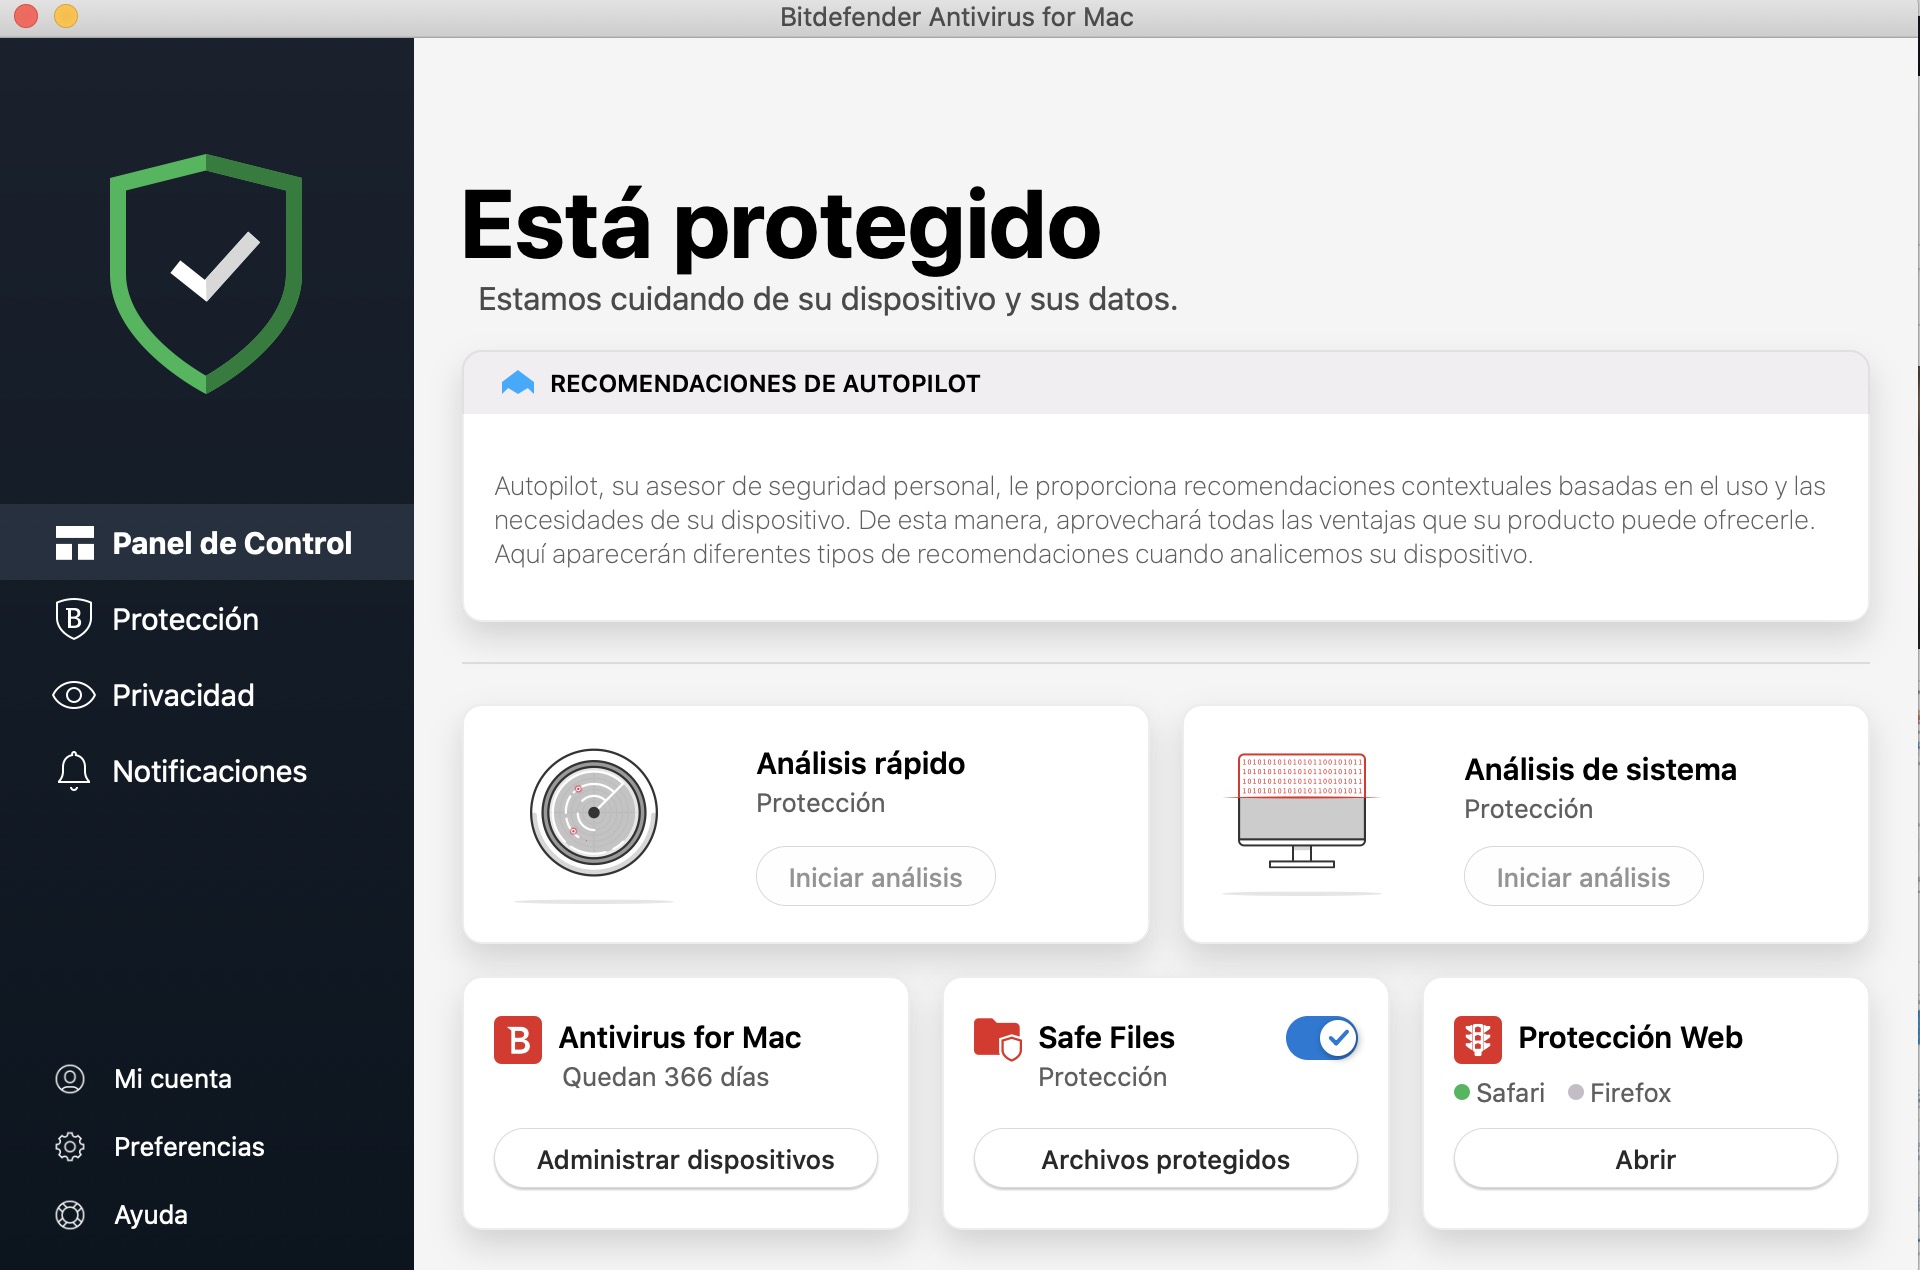 bitdefender antivirus for mac promo